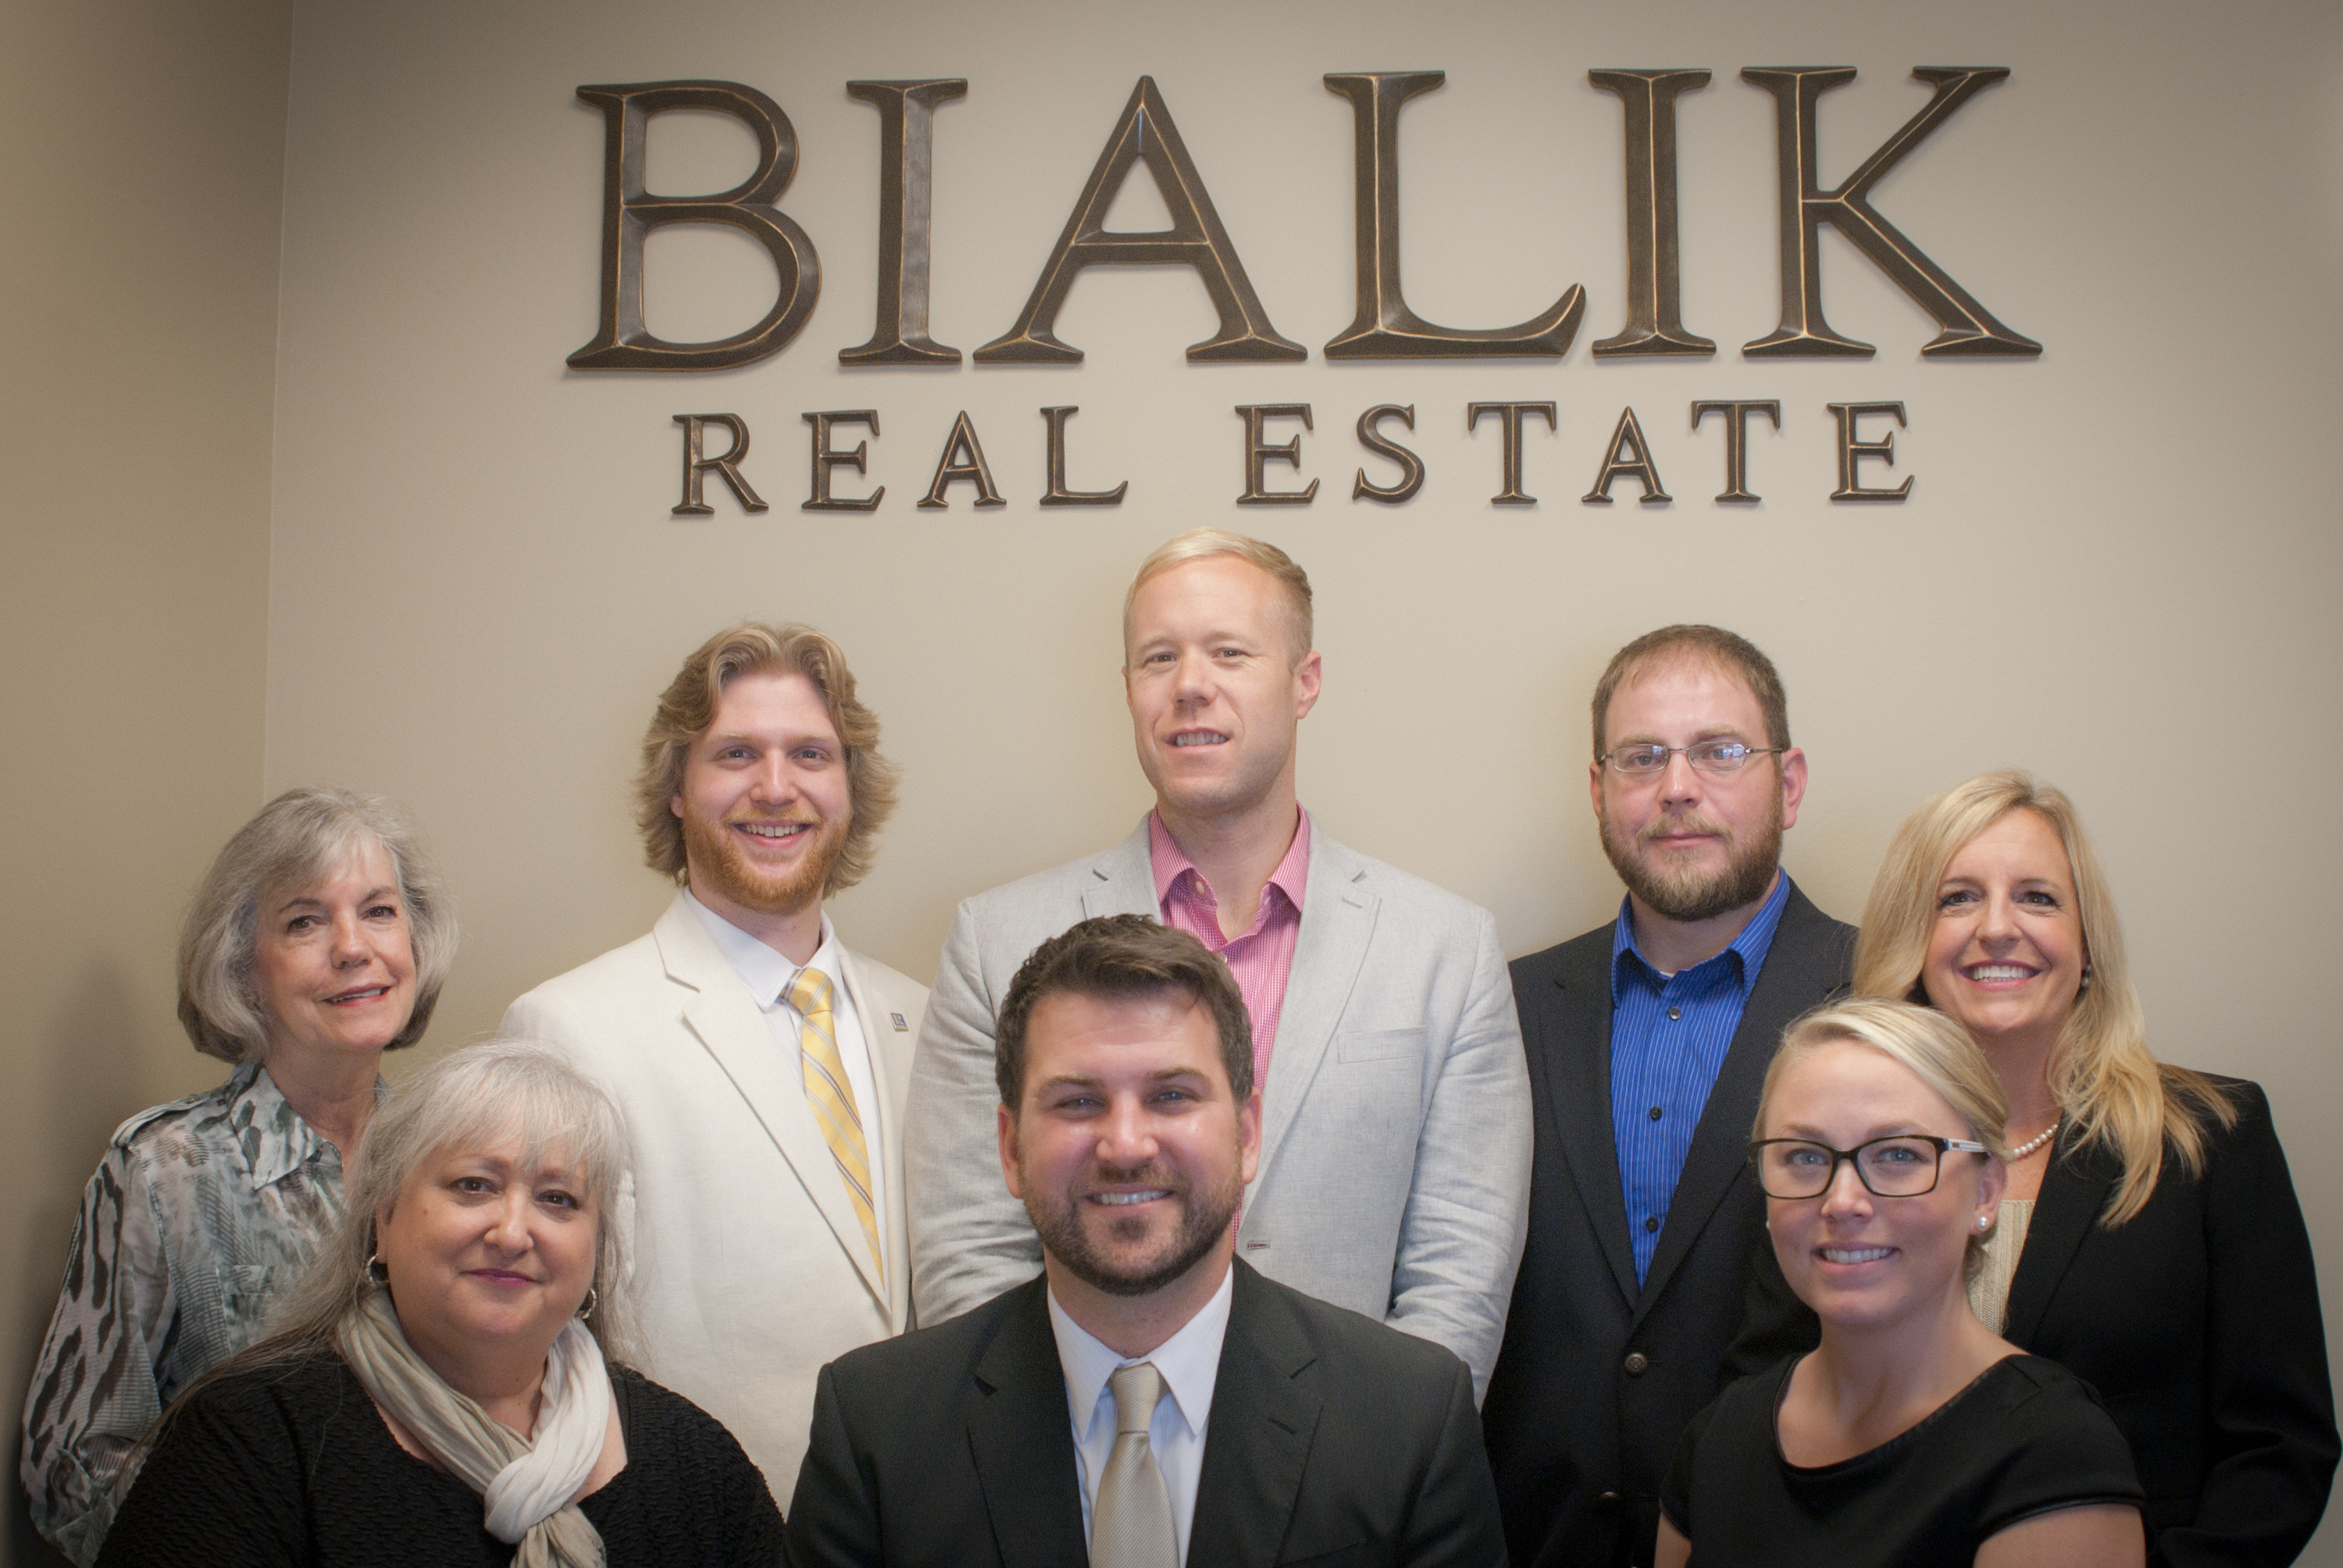 The Bialik Real Estate Team of West Michigan